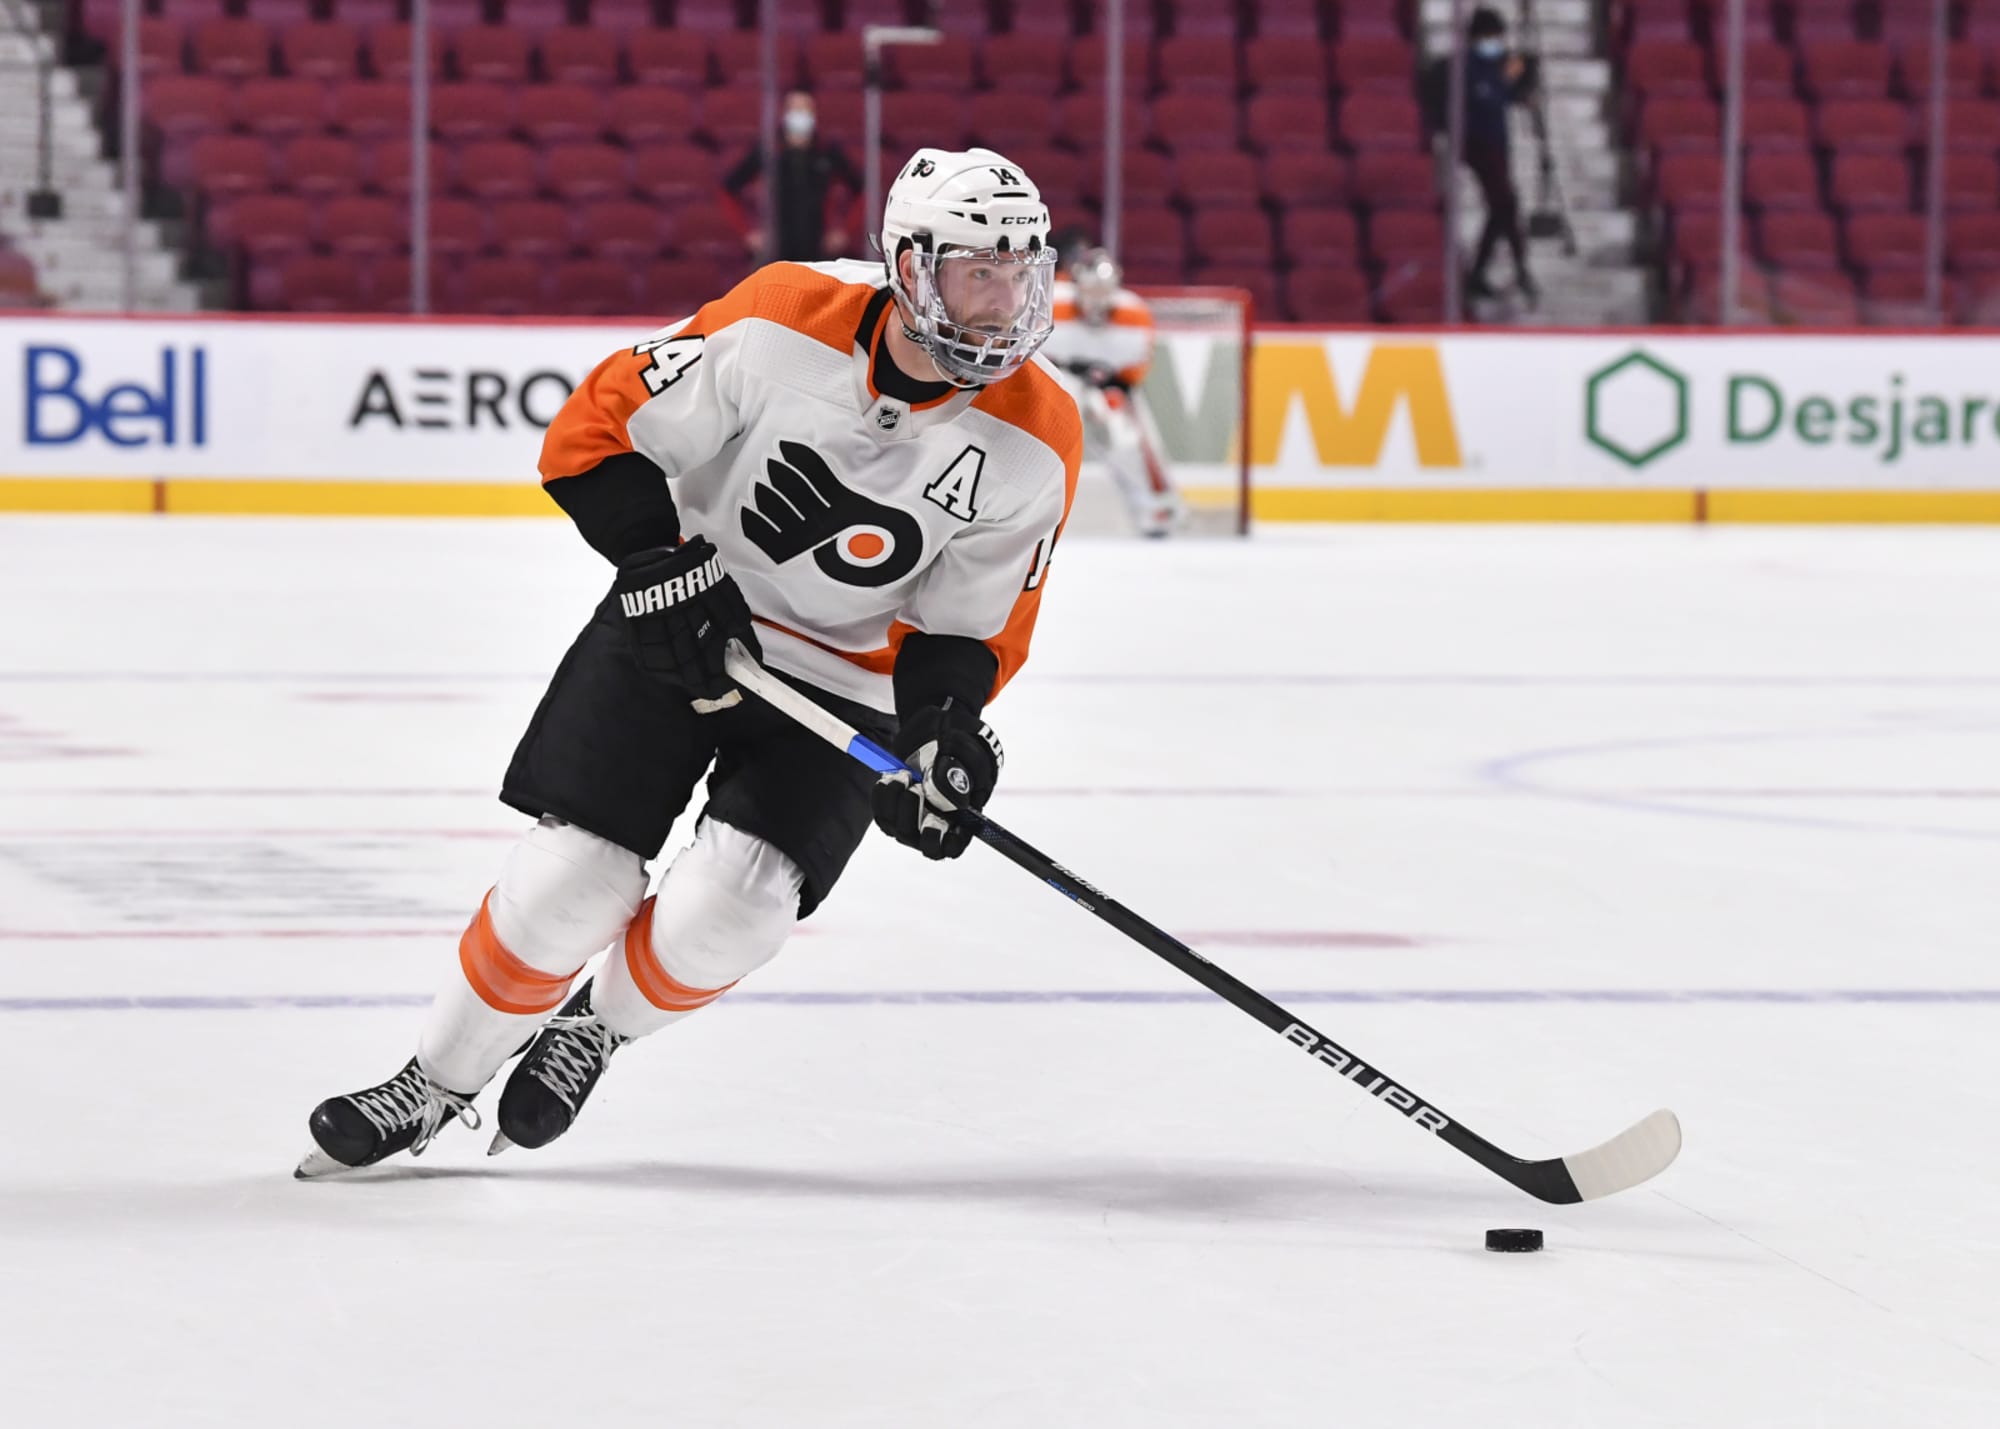 Philadelphia Flyers' projected line combinations for 2023/24 NHL season